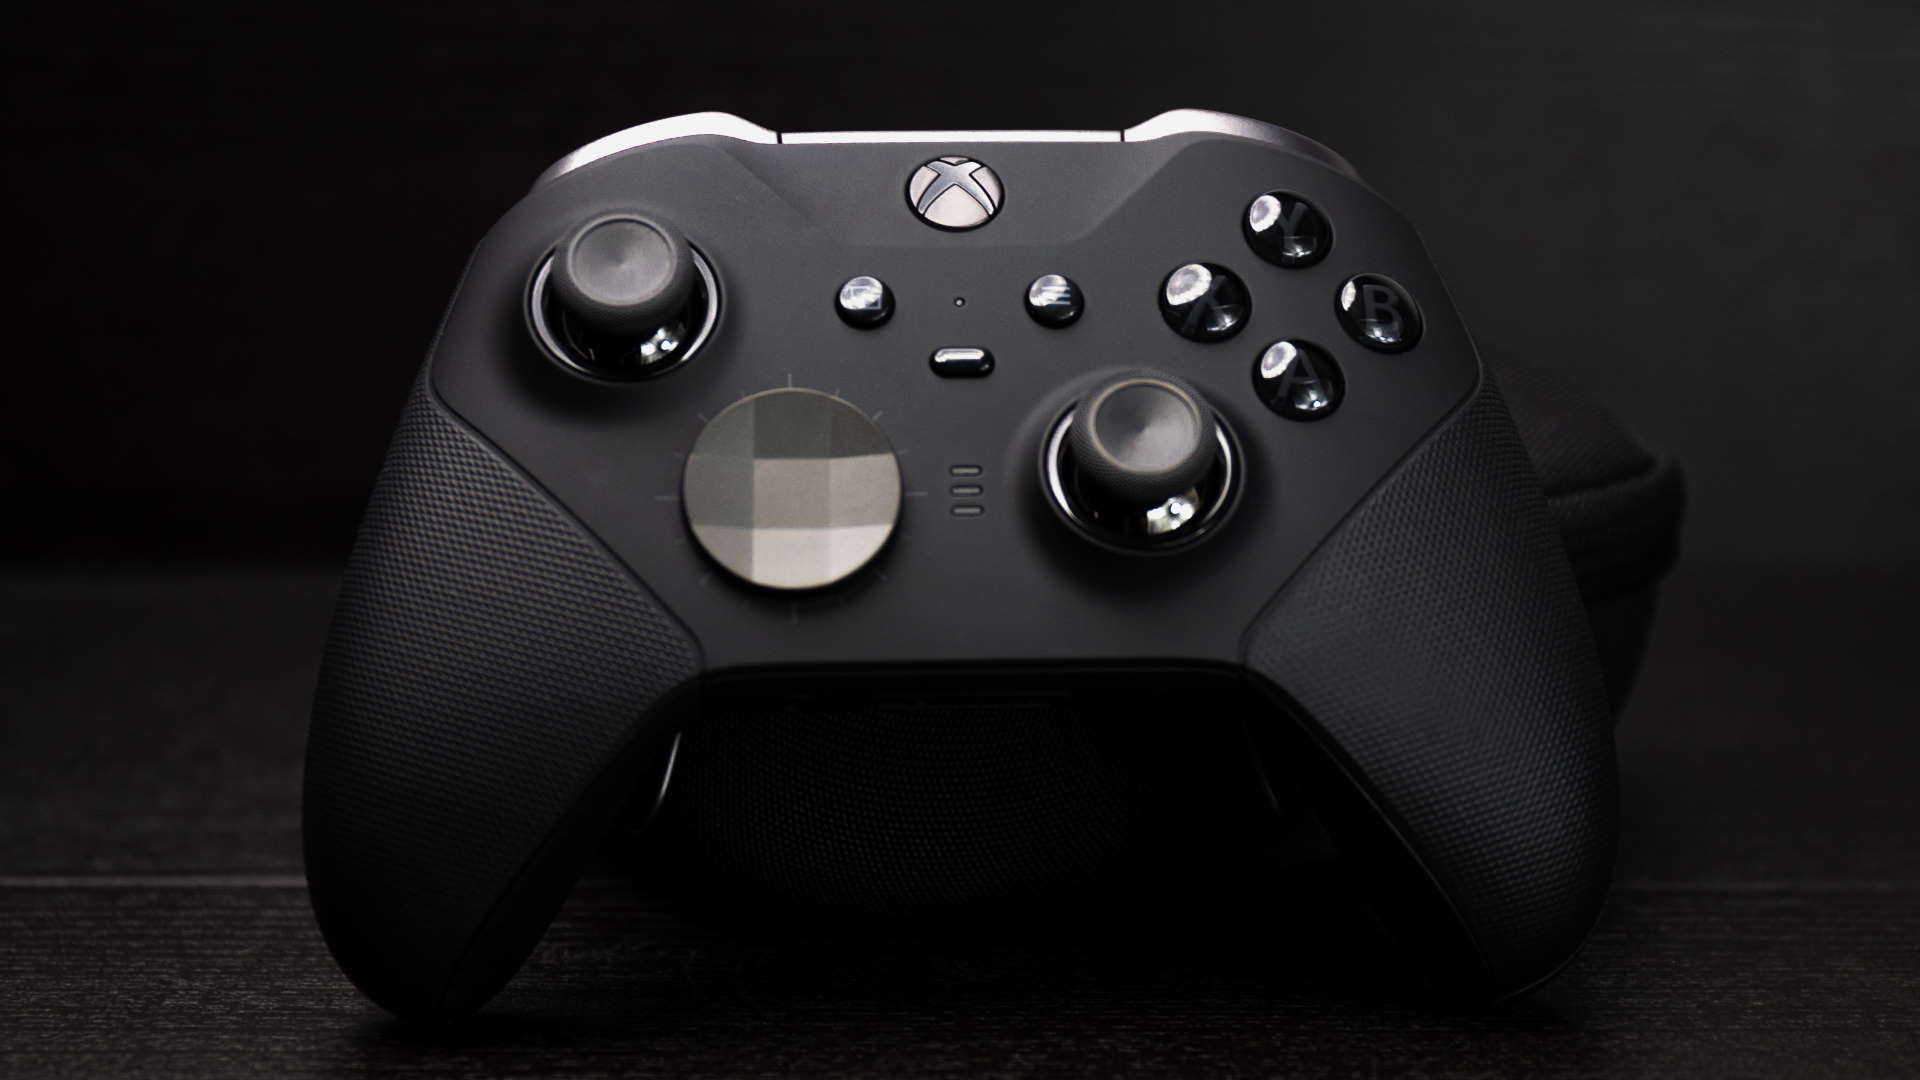 Xbox Elite Controller 2 Review